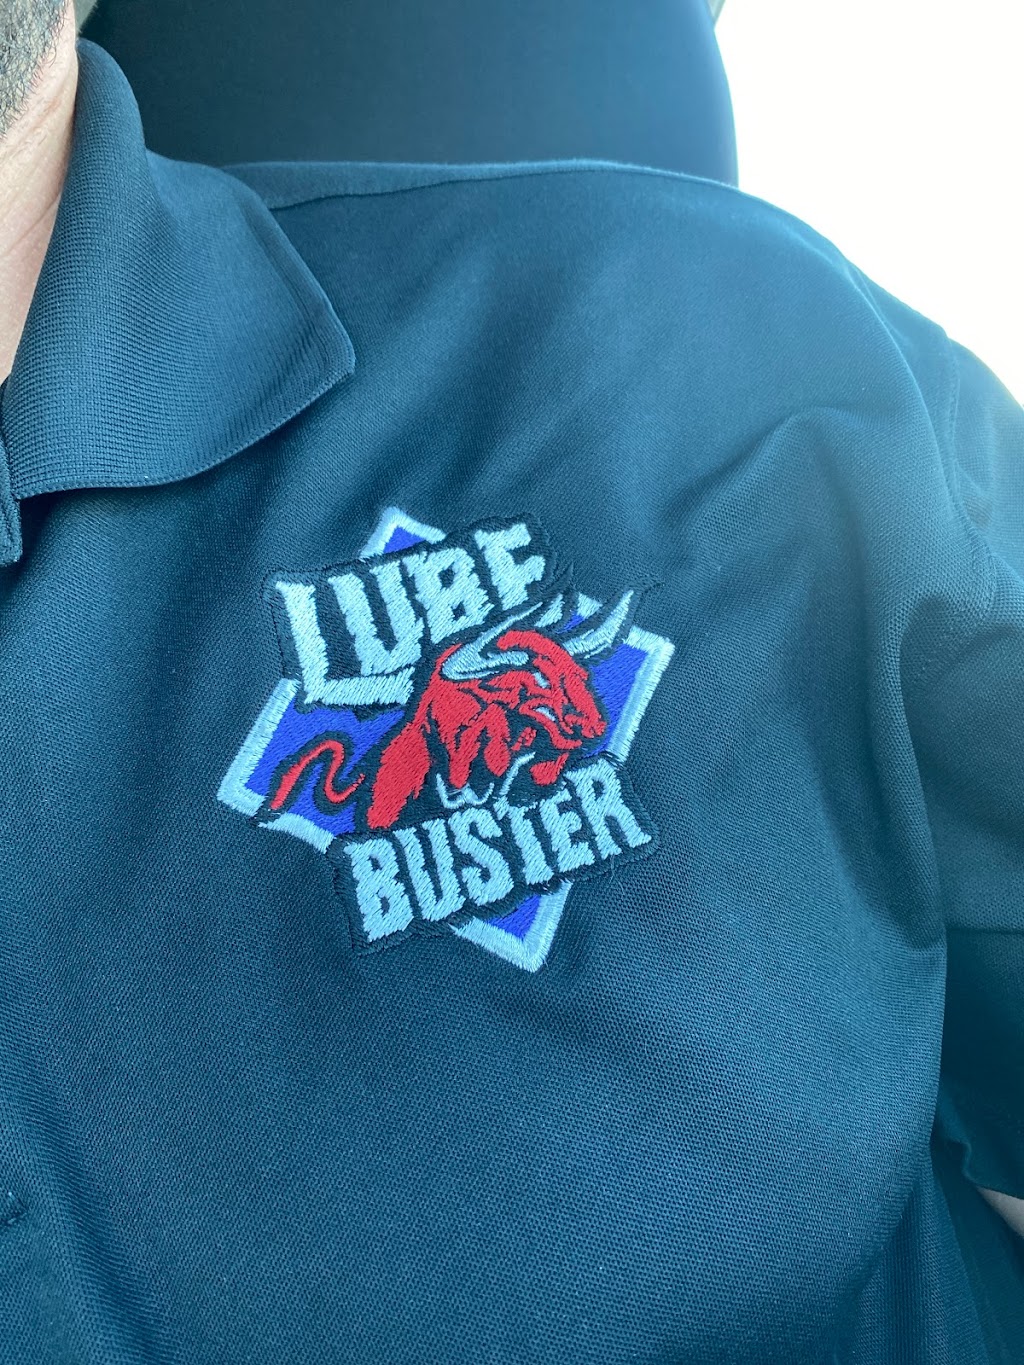 Lube Buster INC | 2450 Alvarado St #9, San Leandro, CA 94577 | Phone: (510) 878-7811